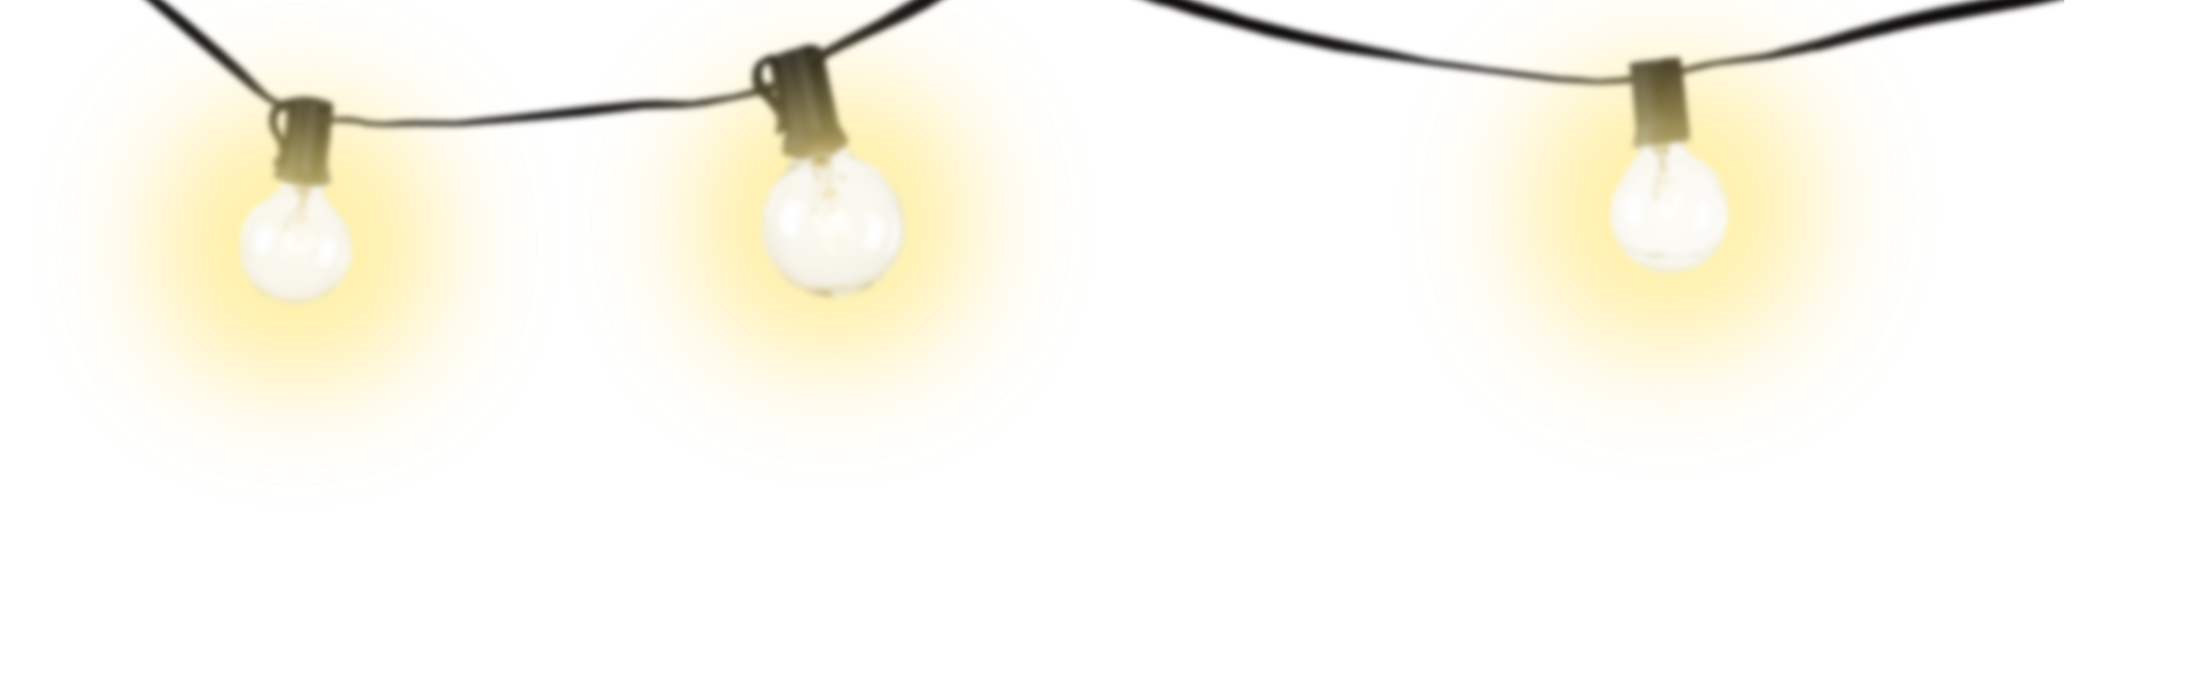 Download PNG image - Electric Light Lamp Transparent Background 